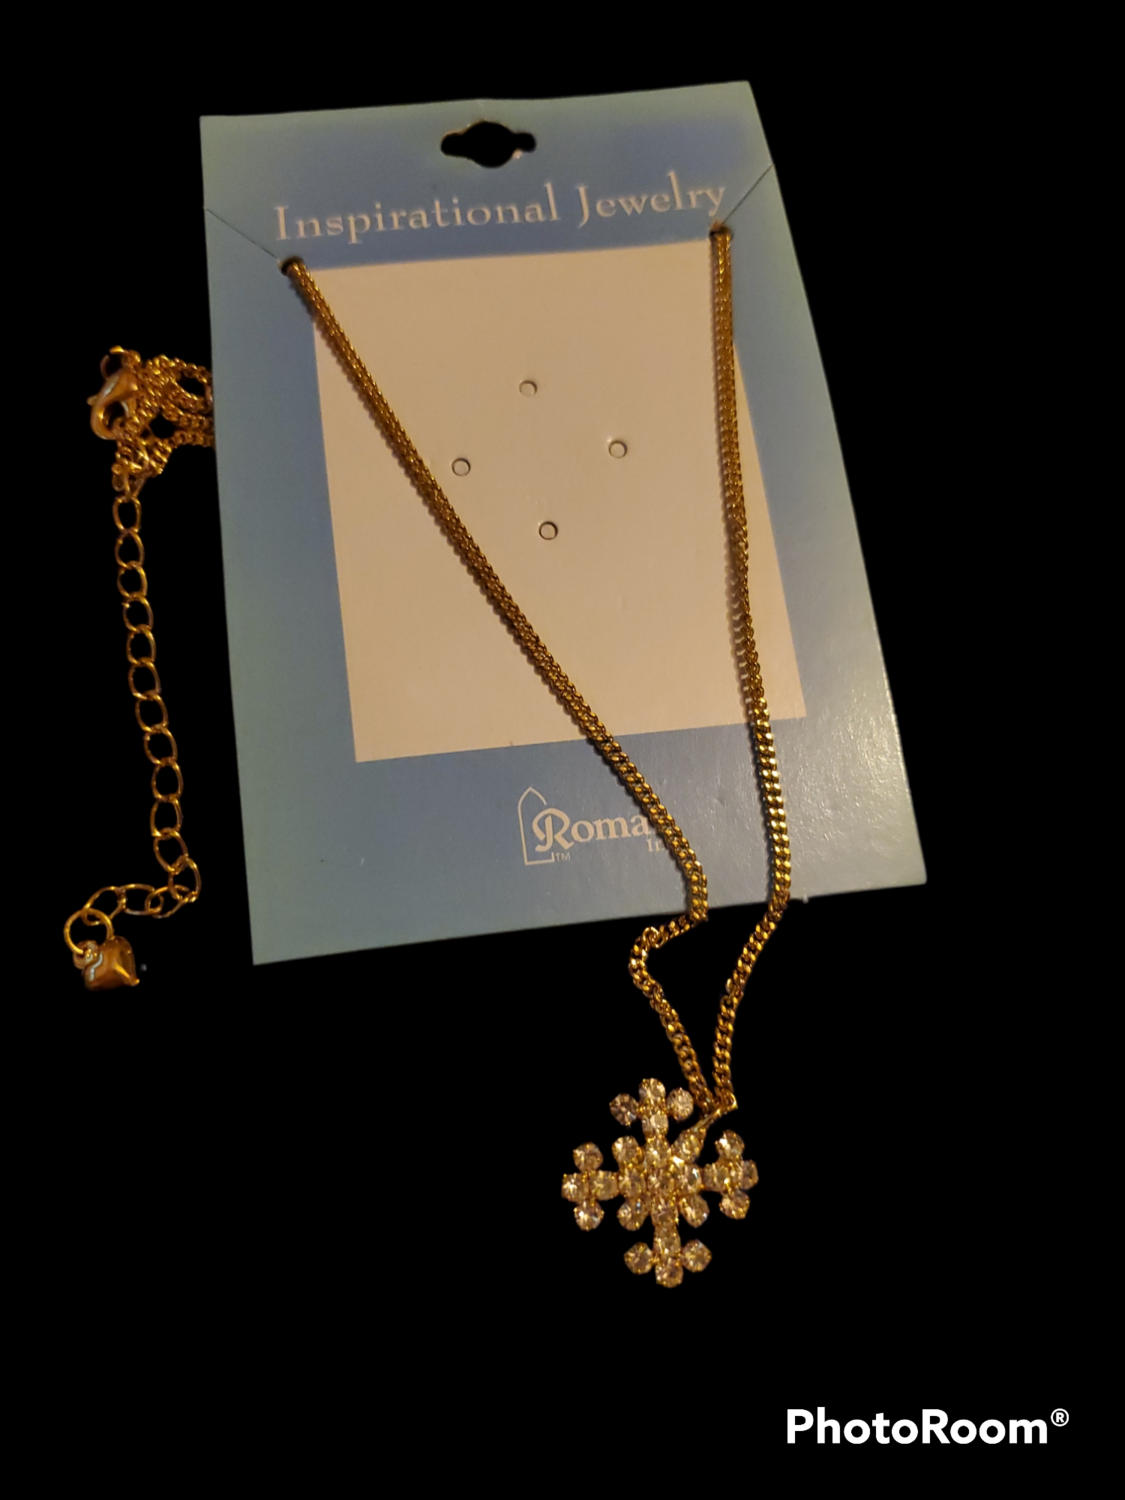 Roman inspirational diamond cross necklace